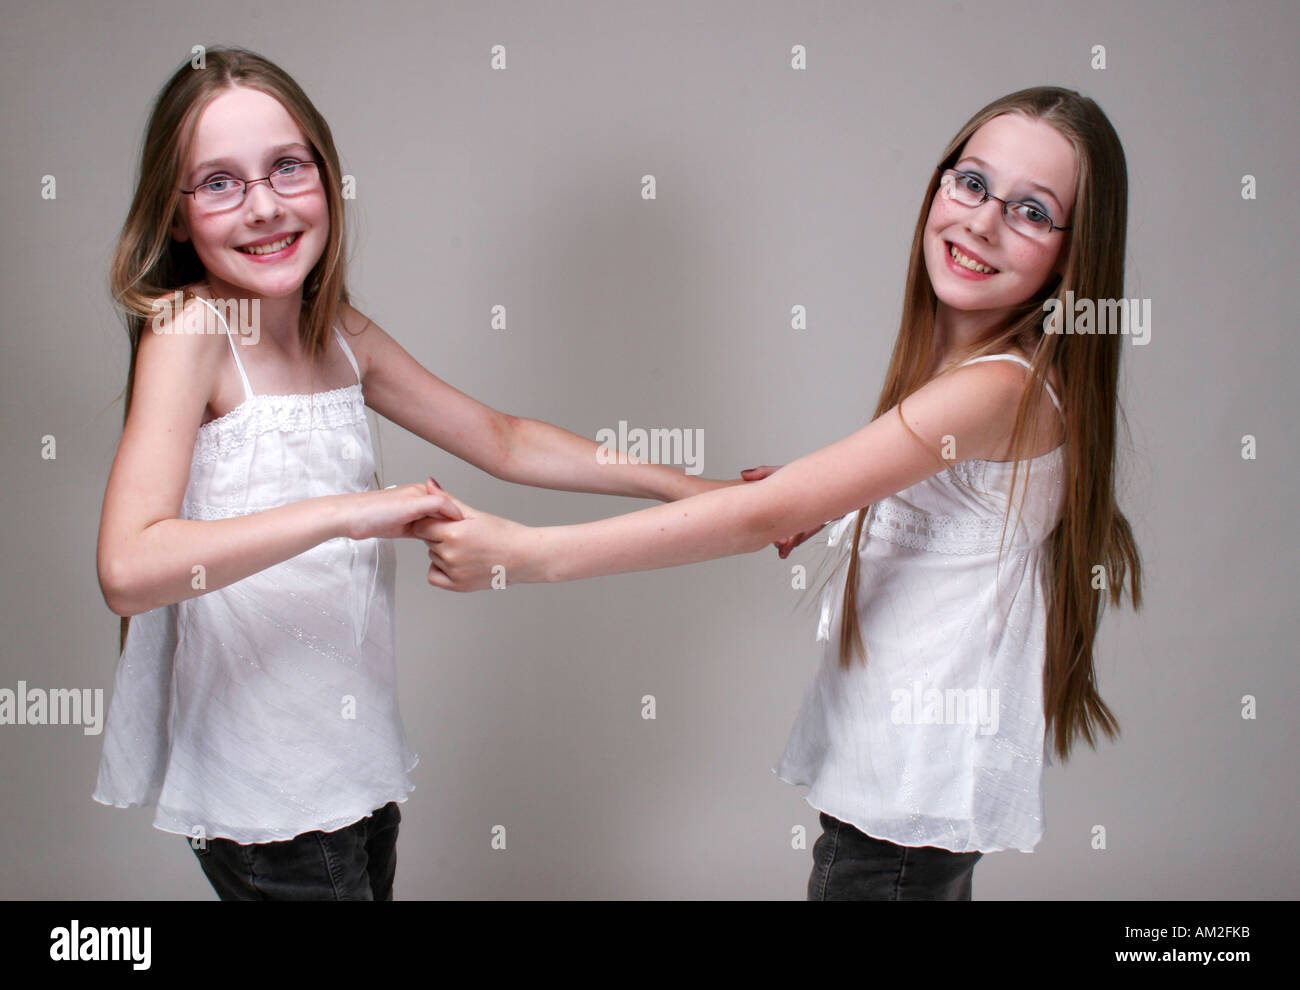 twin girl kid pose in white cutout background blond Caucasian European Stock Photo